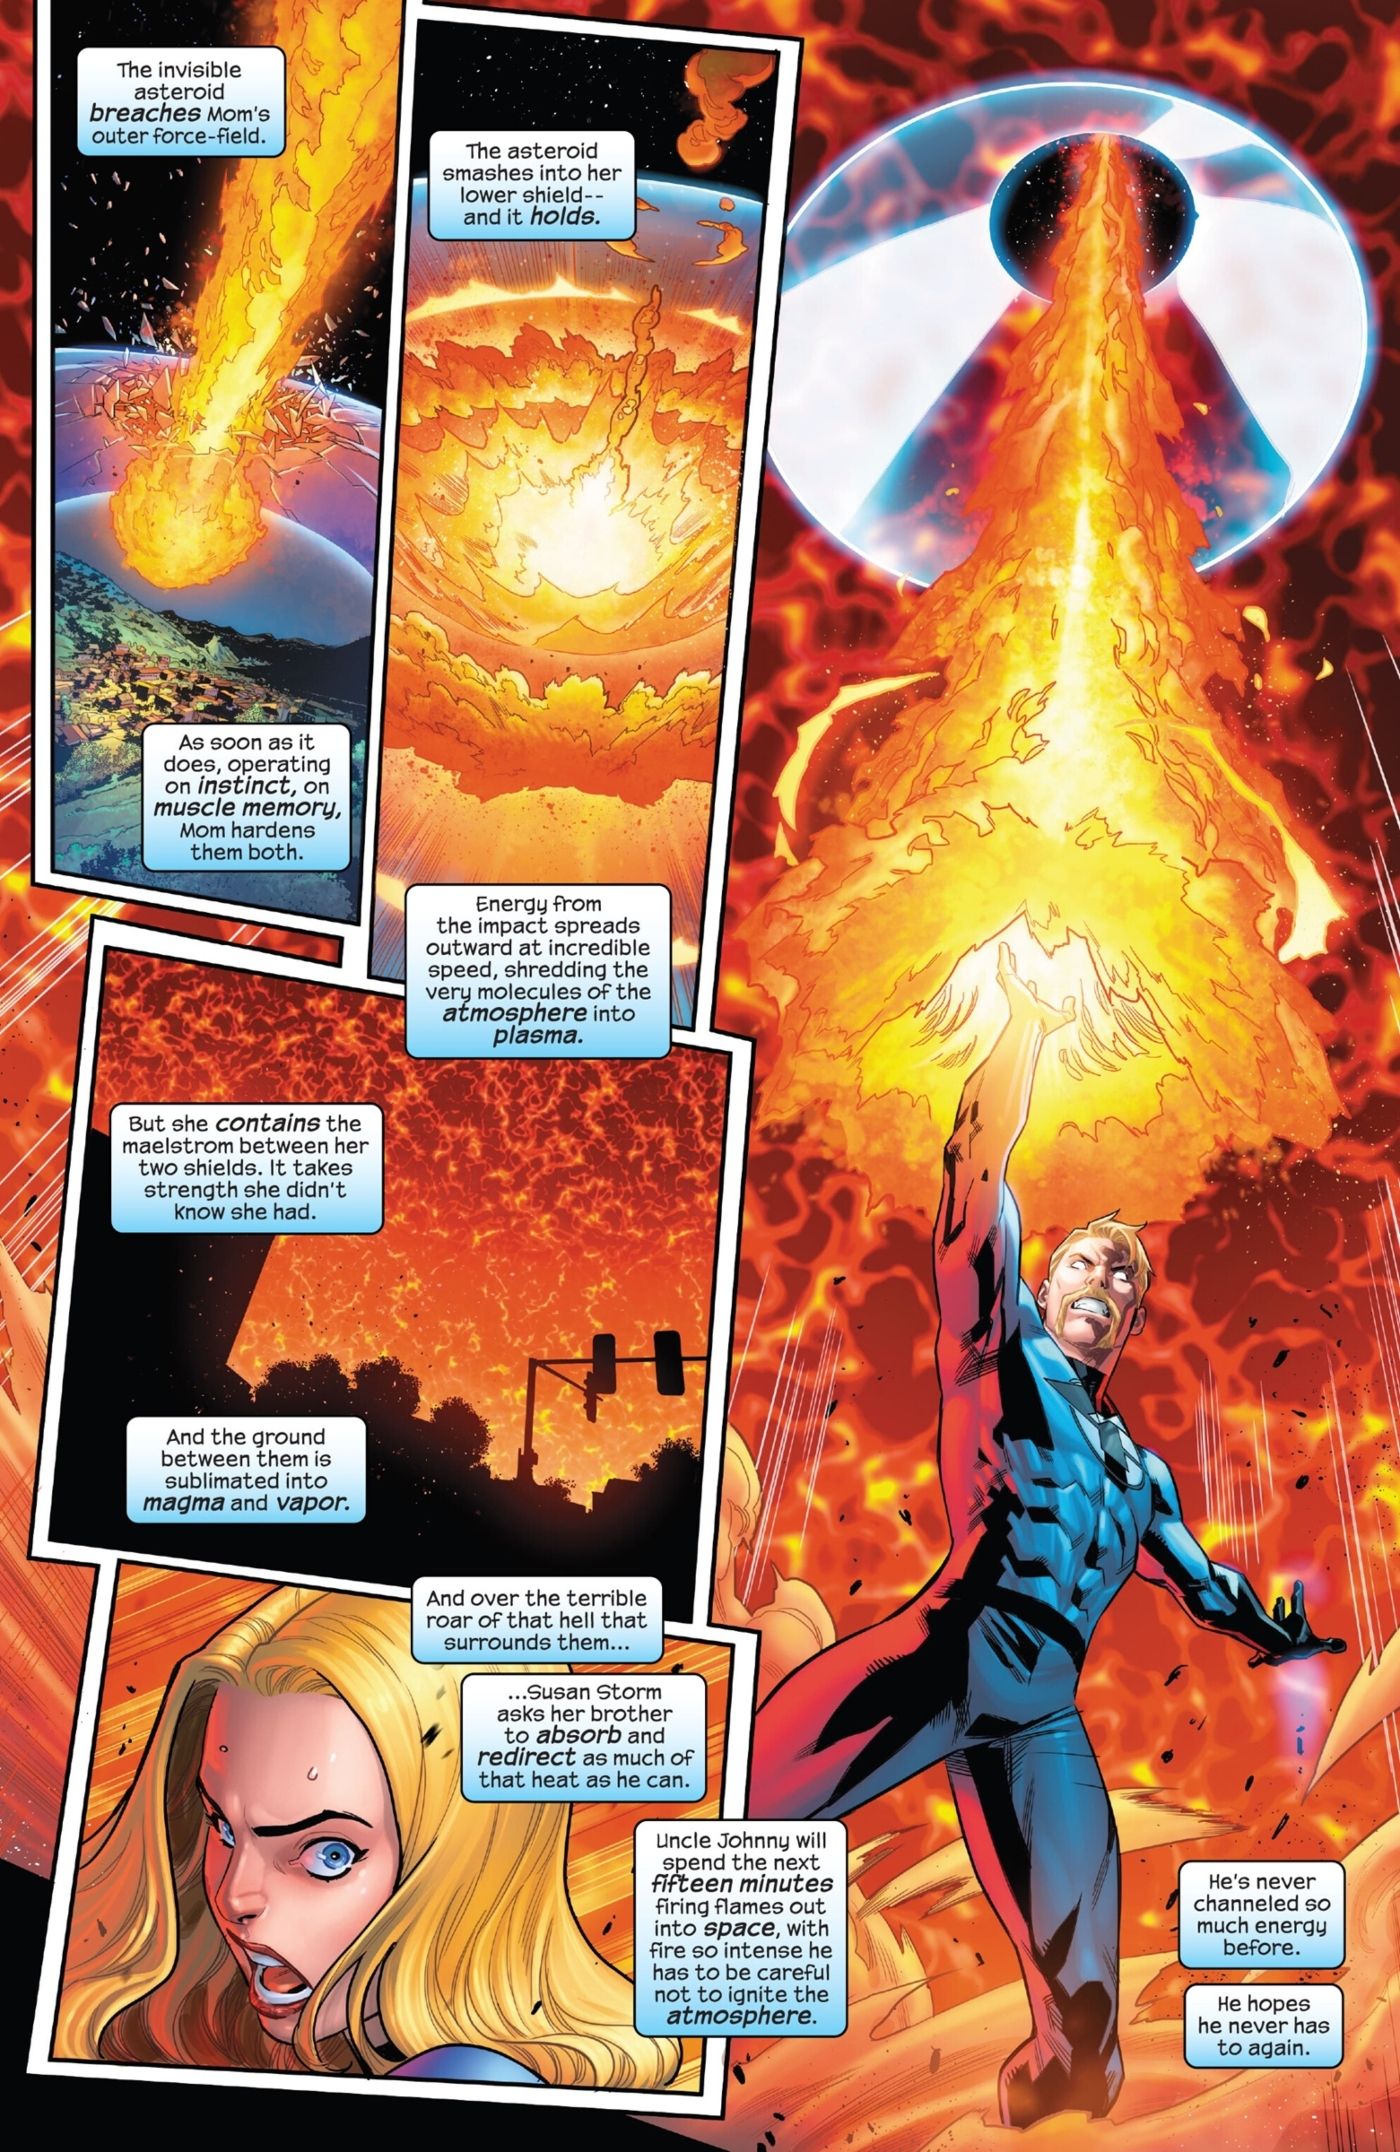 Fantastic Four Updates 2 Members’ Maximum Power, Making Them Avengers-Level